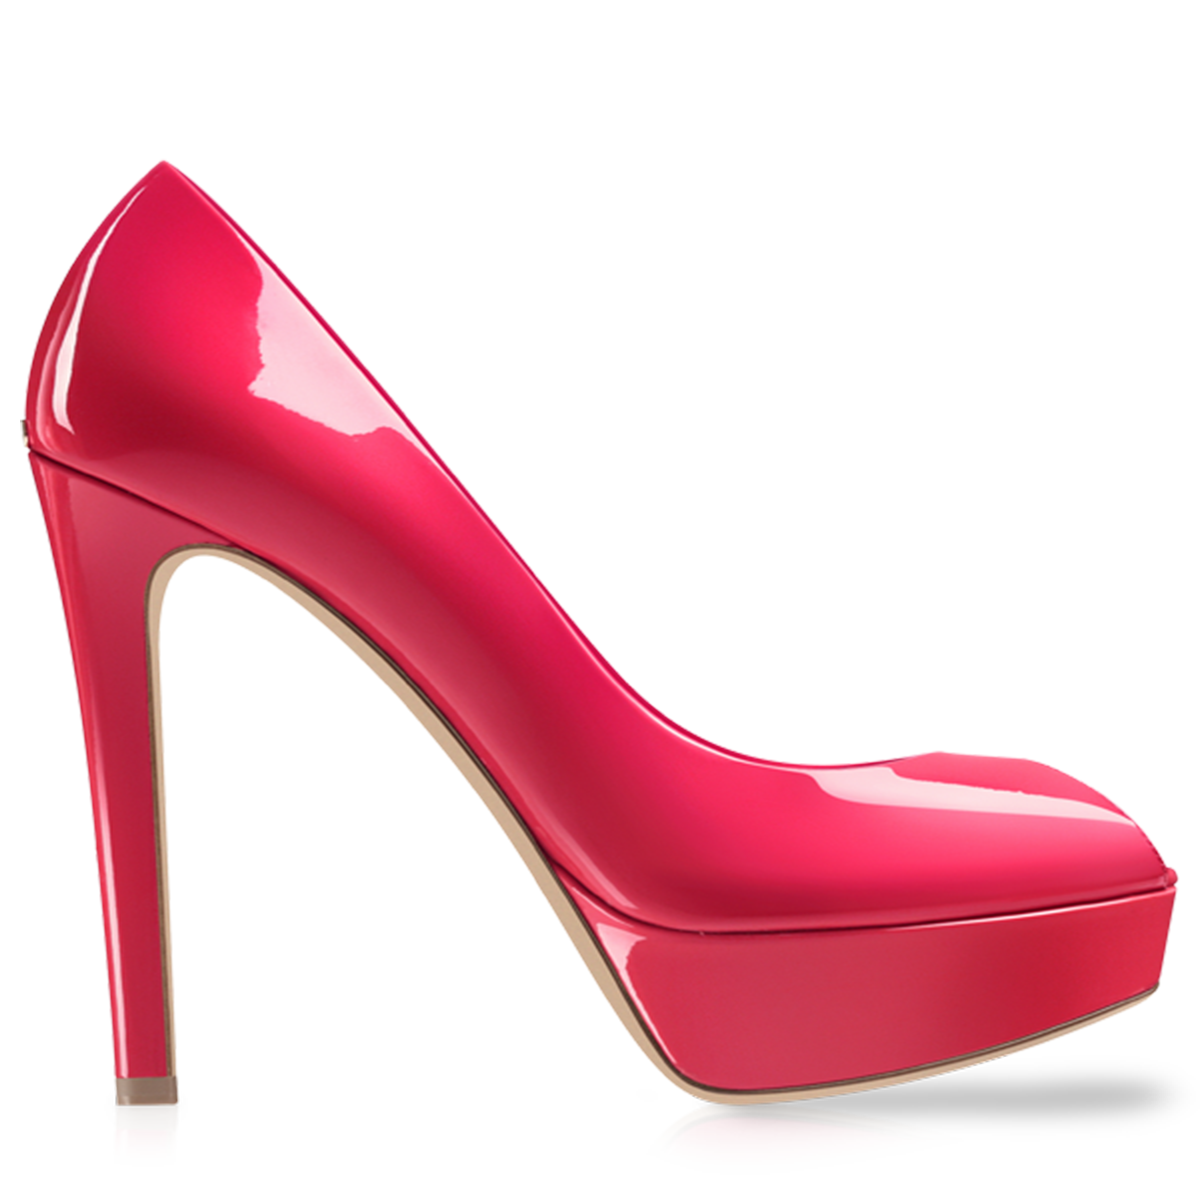 Kheila Pink Women Shoe